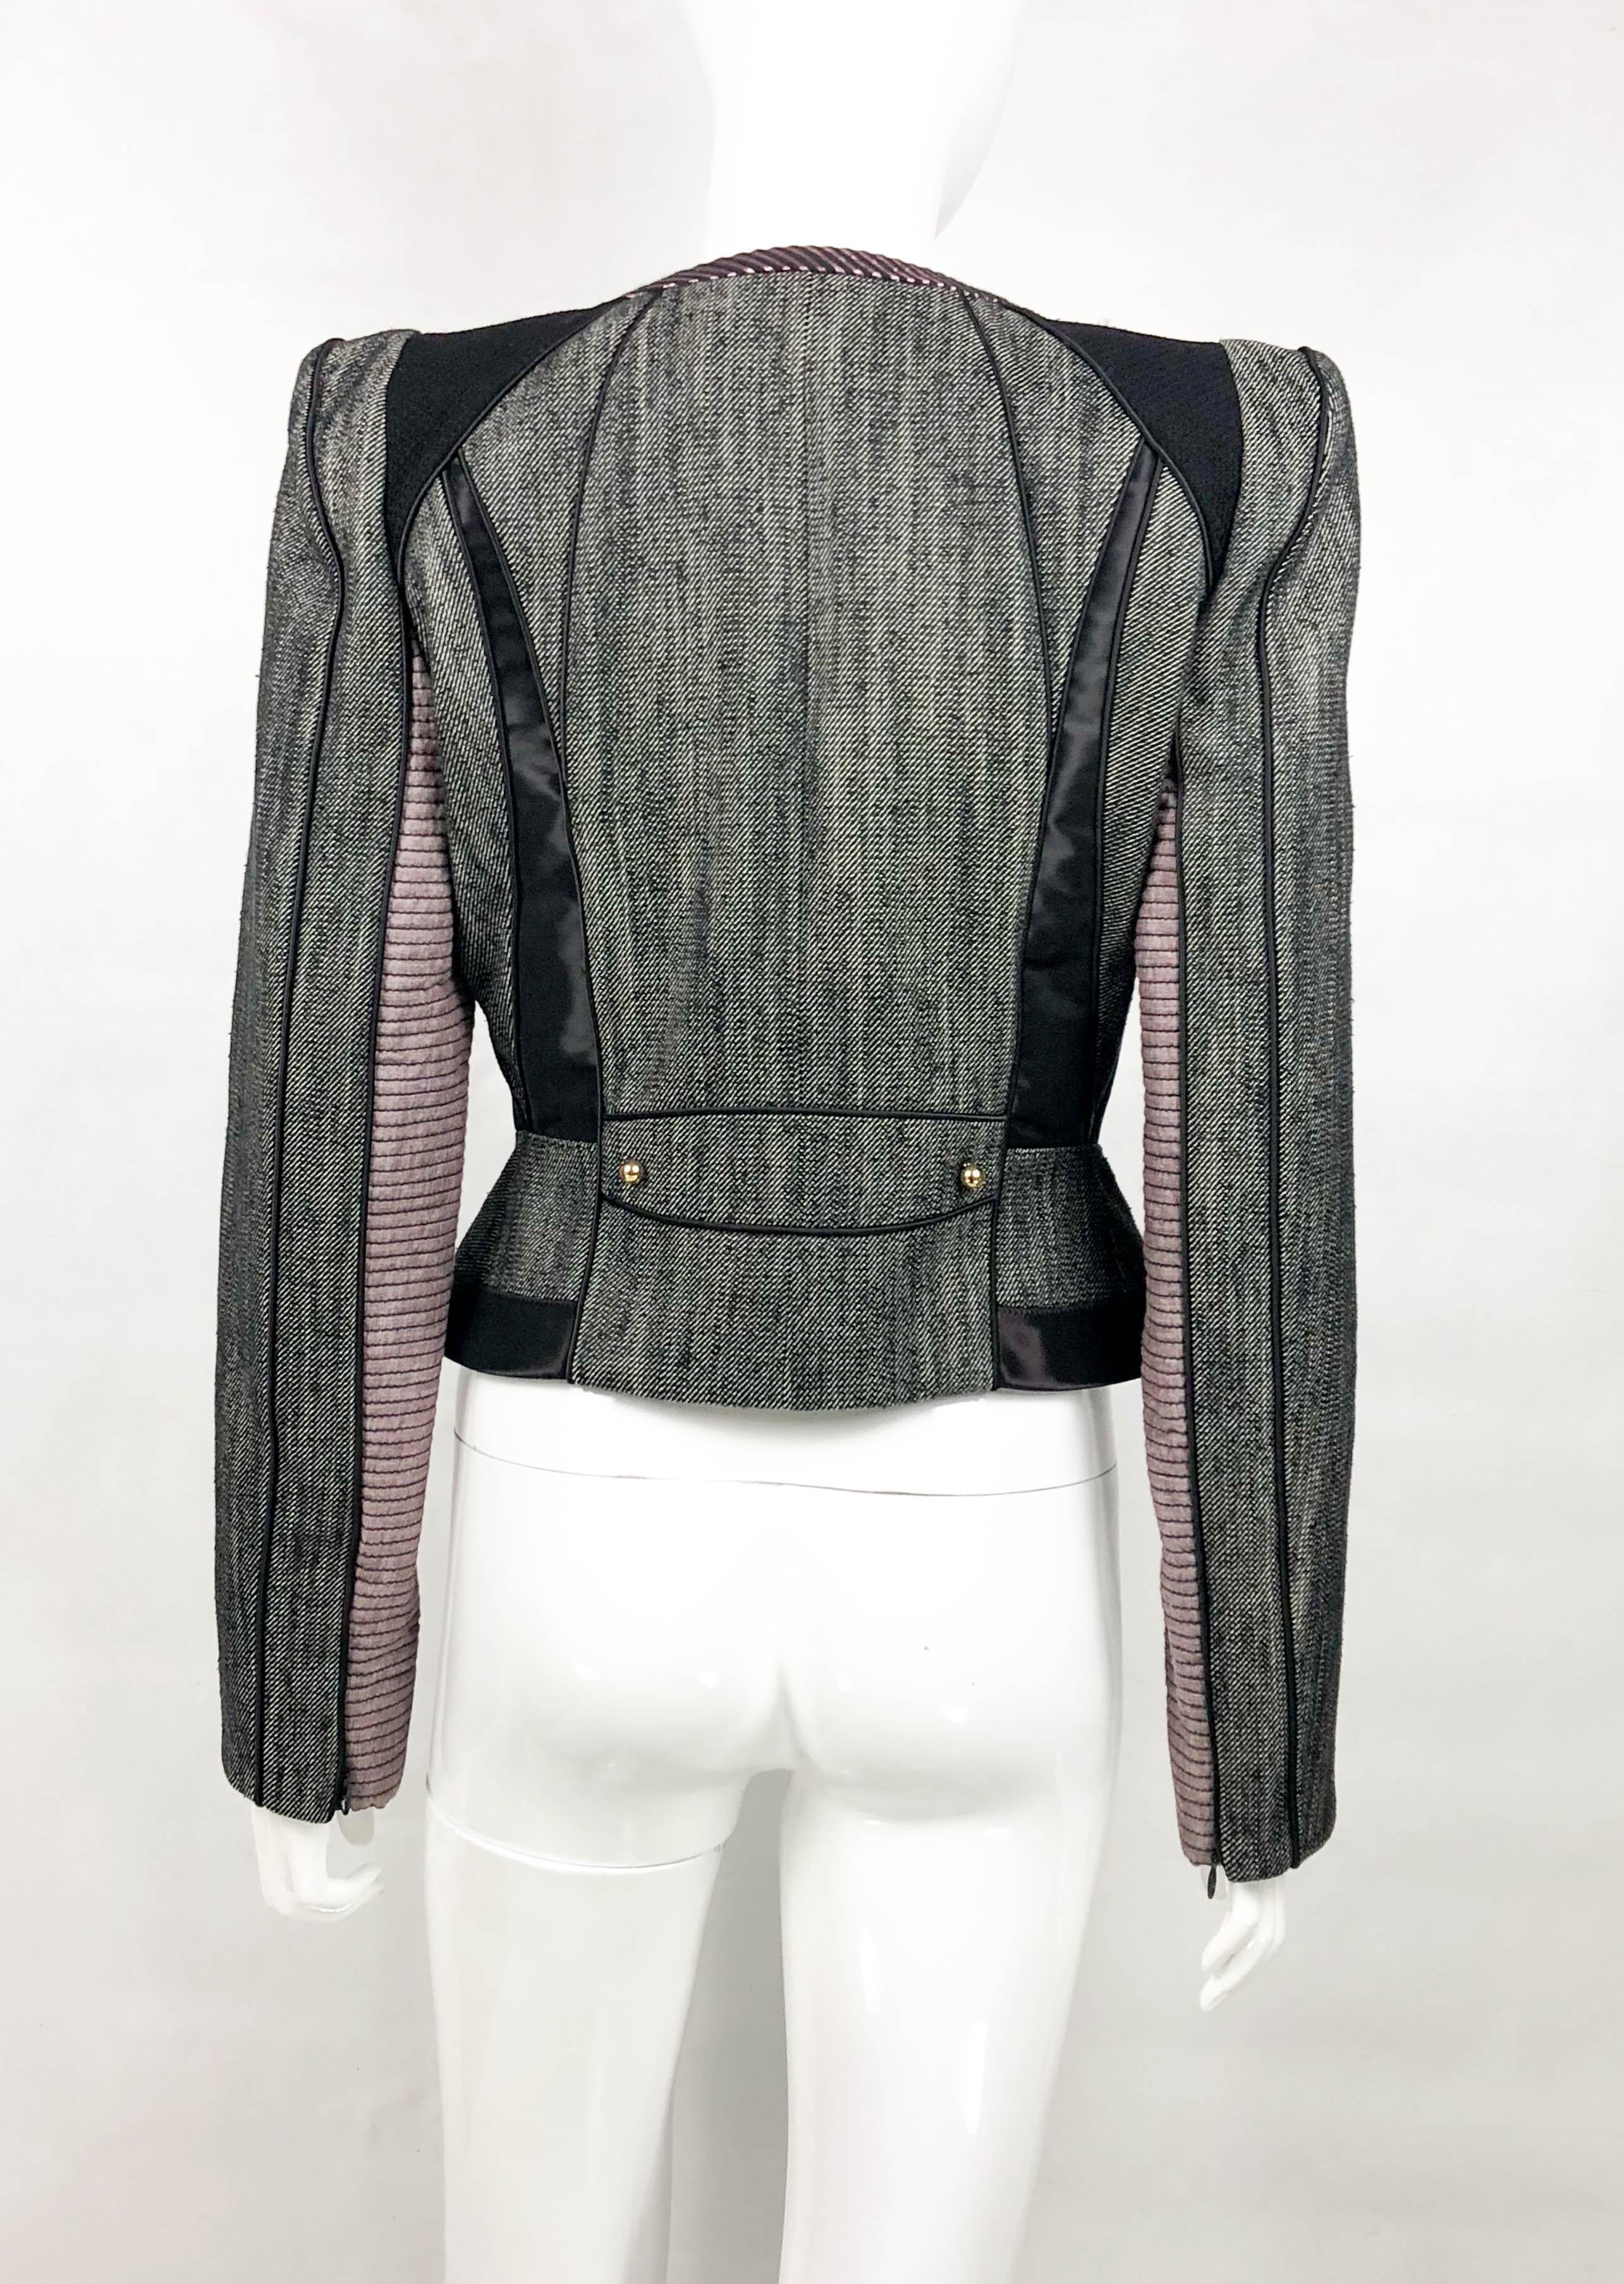 2009 Louis Vuitton Runway Piece Futuristic Jacket For Sale 2